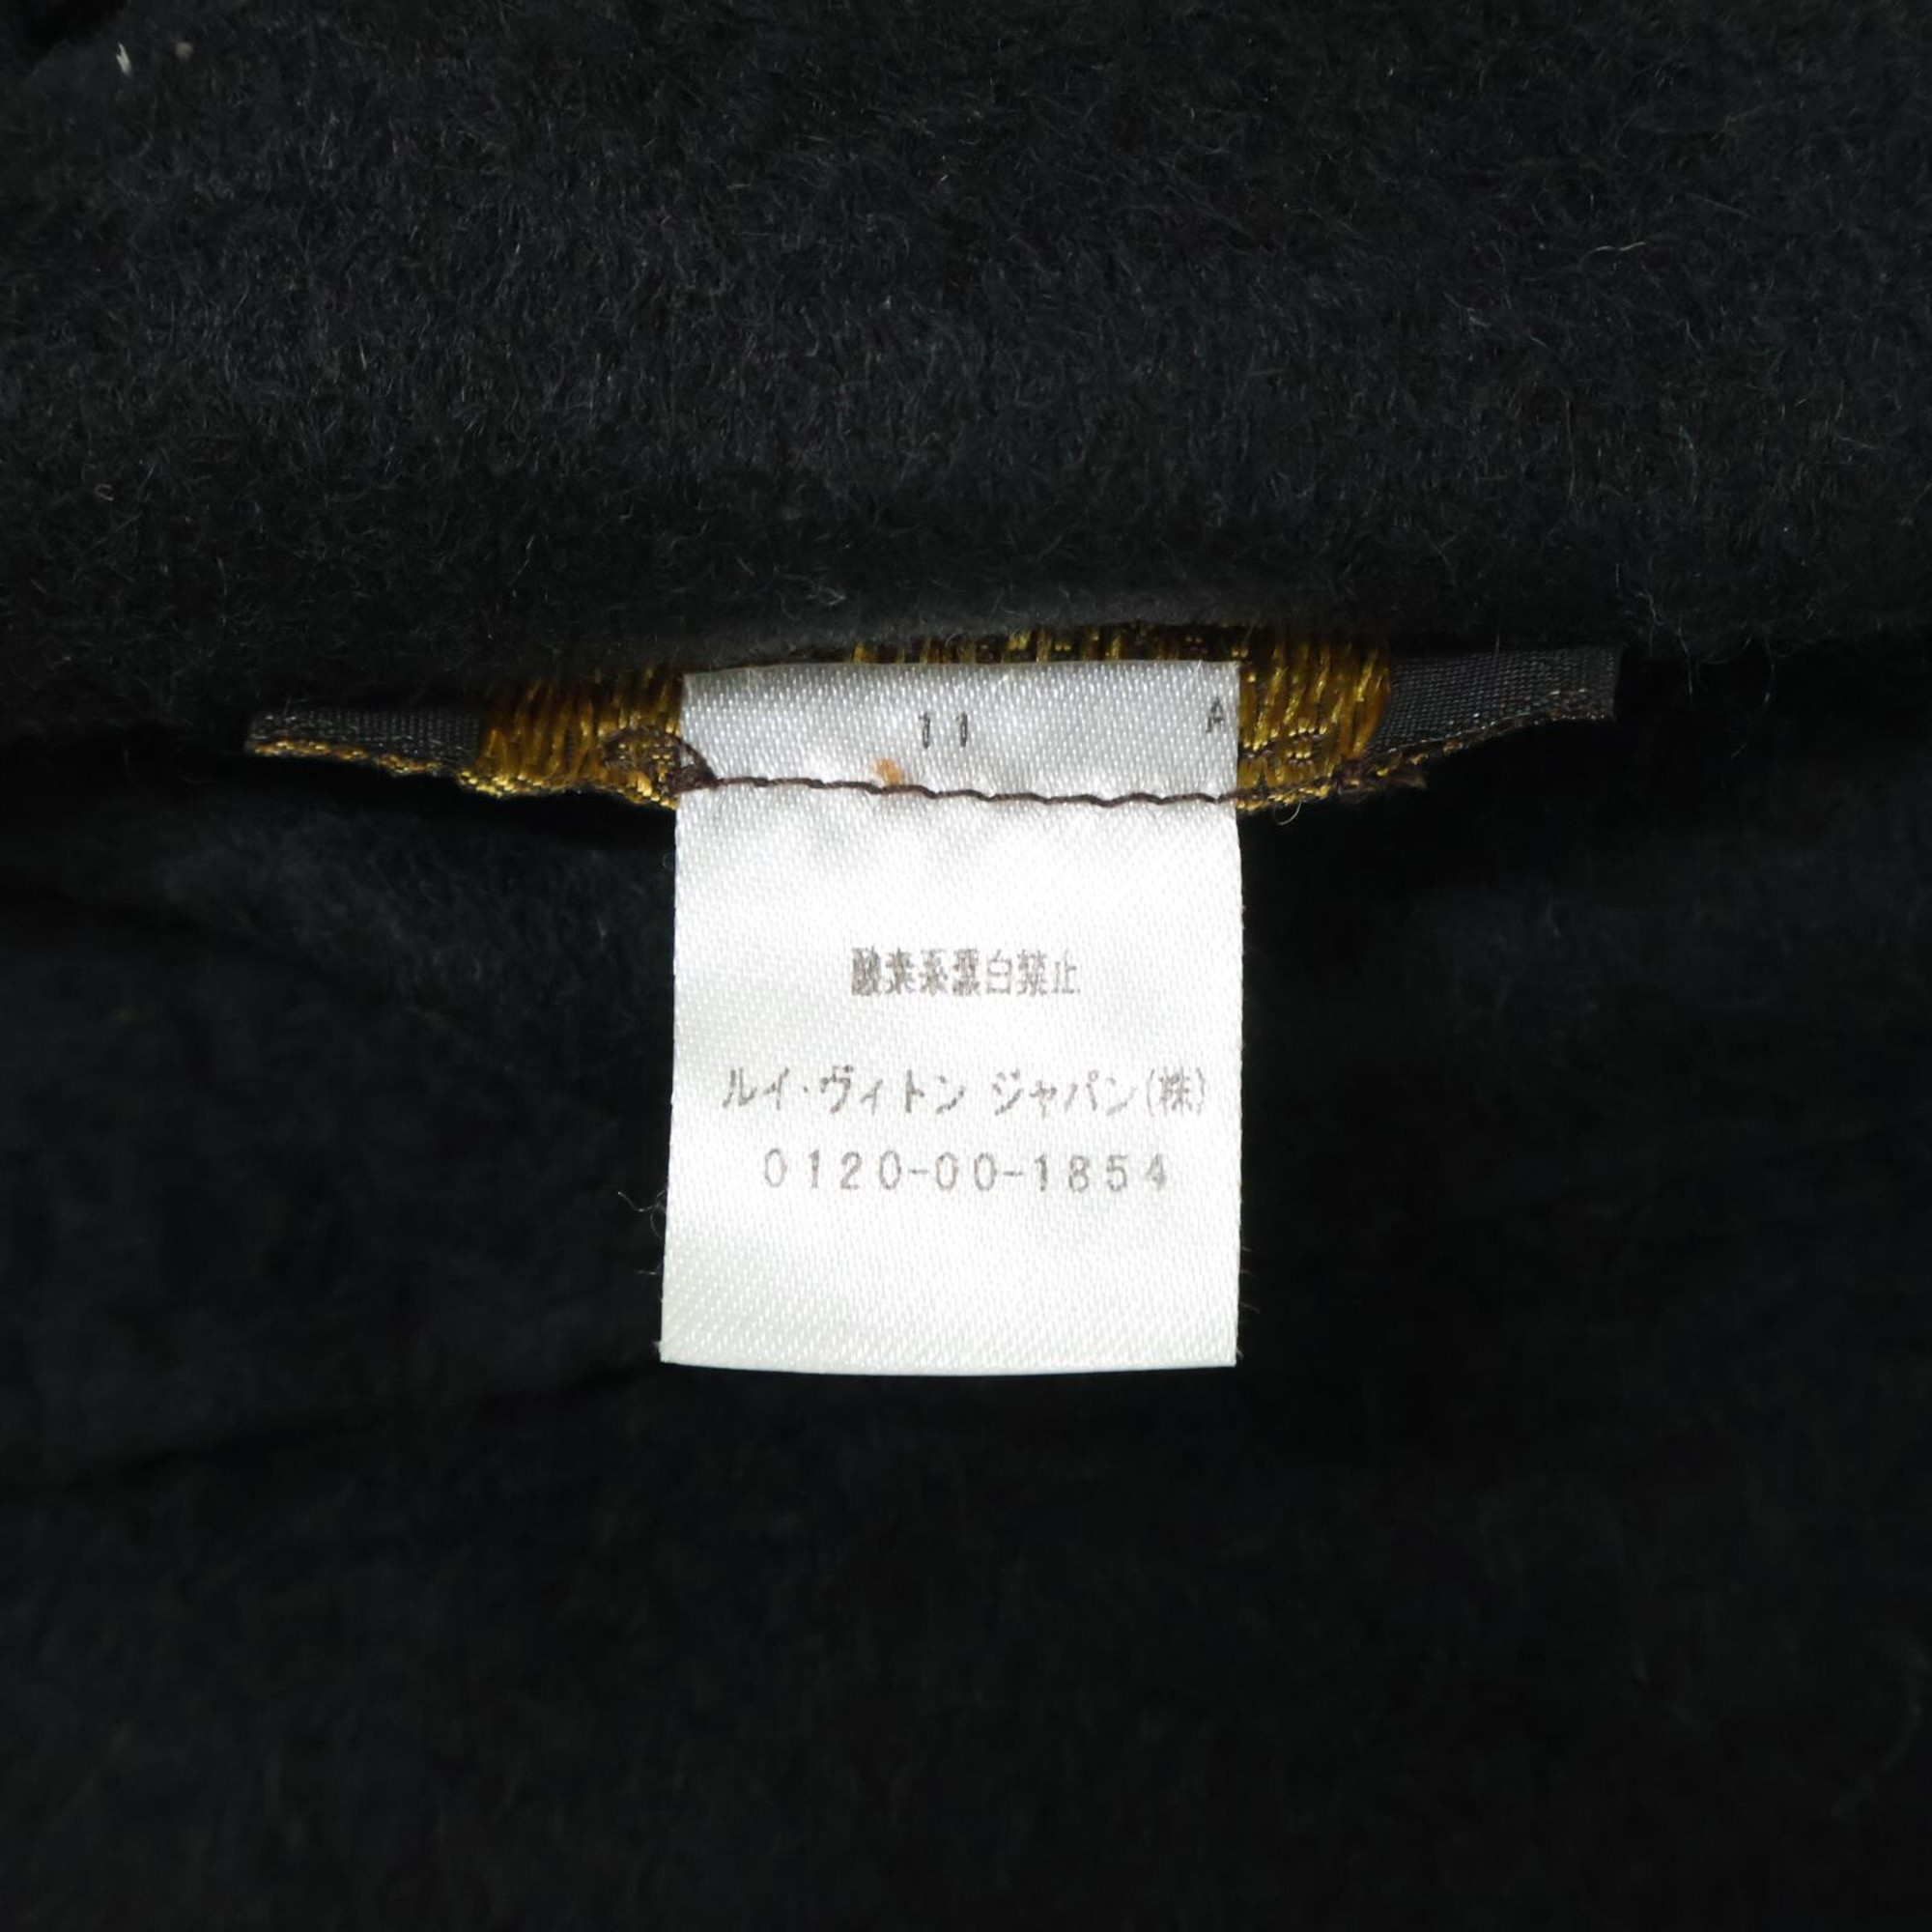 LOUIS VUITTON M75362 Echarpe Geram LV Embroidered Cashmere Scarf Black Men's